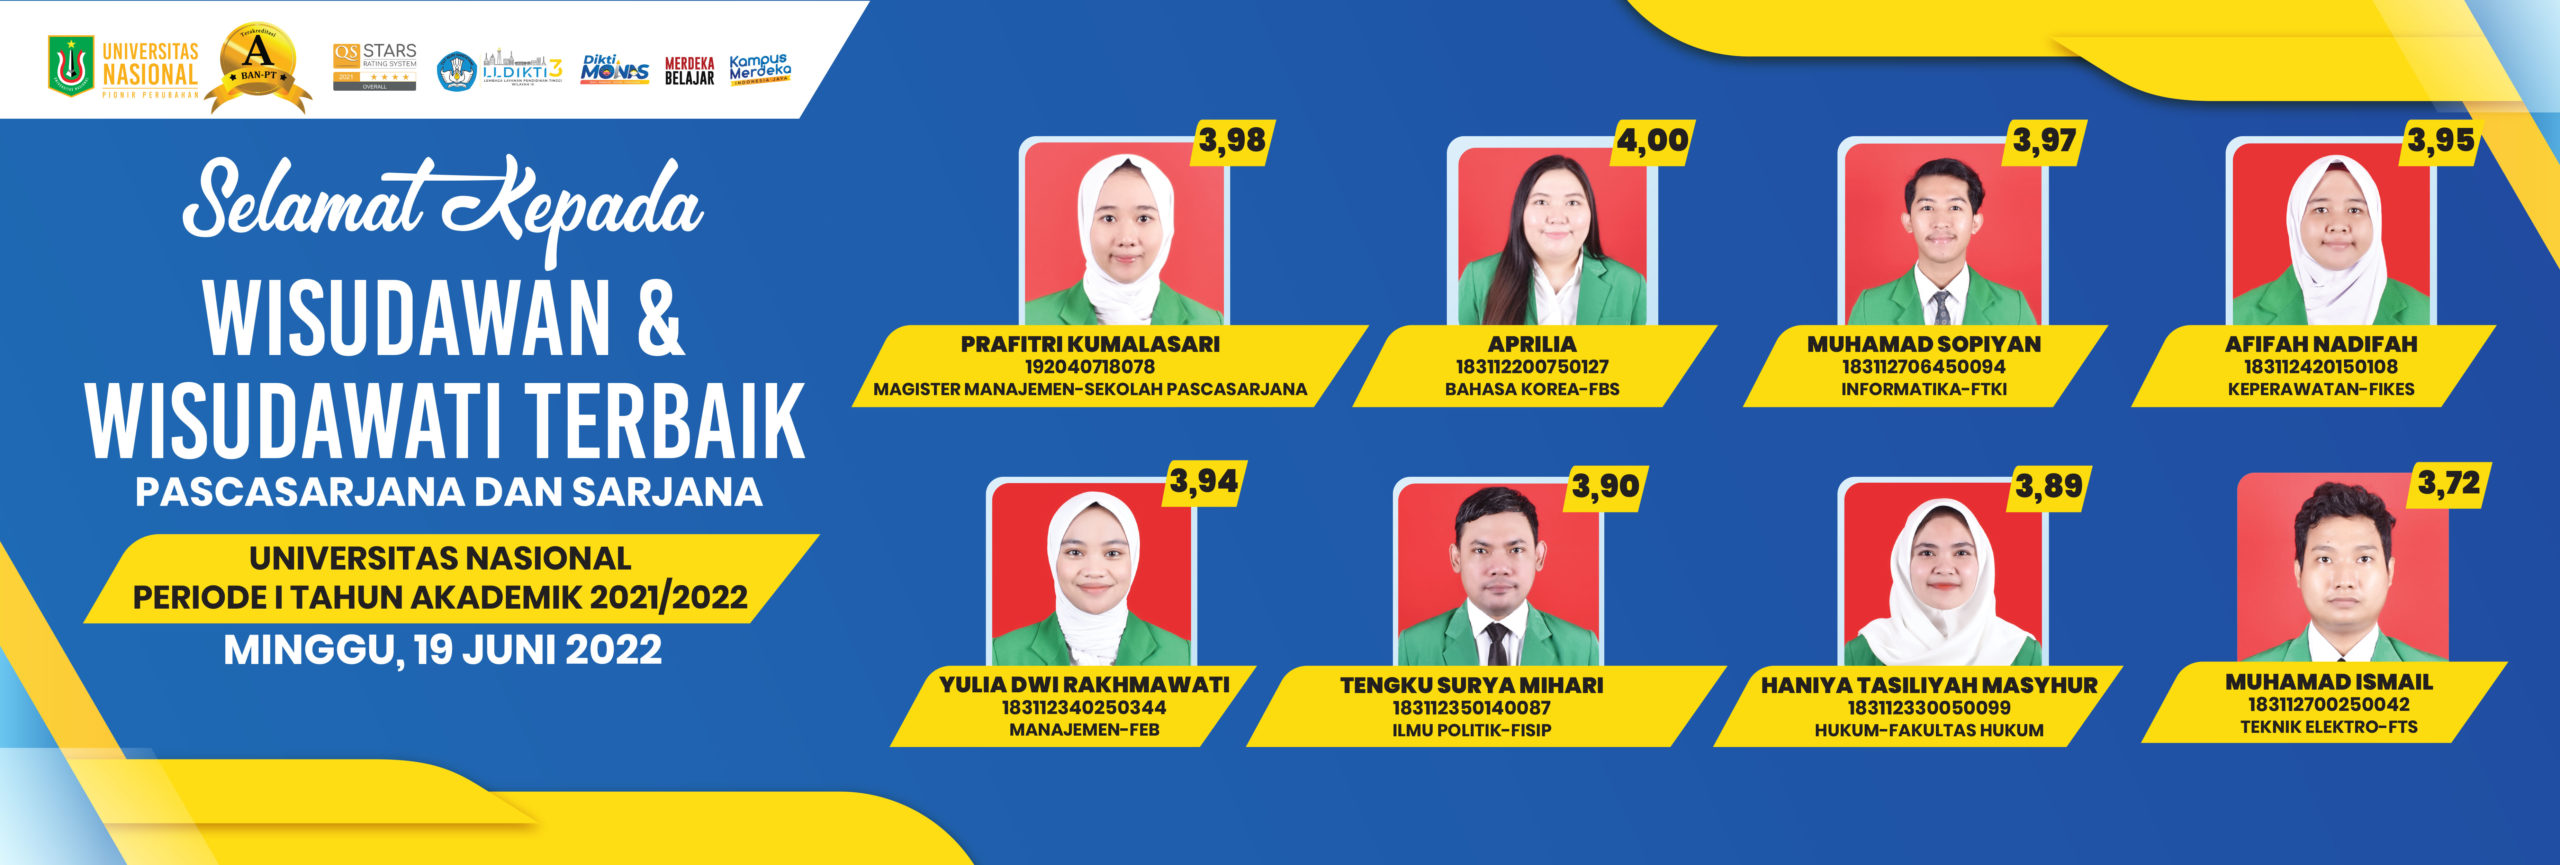 Wisudawan & Wisudawati Terbaik Pascasarjana Dan Sarjana Universitas Nasional Periode I Tahun Akademik 2021/2022